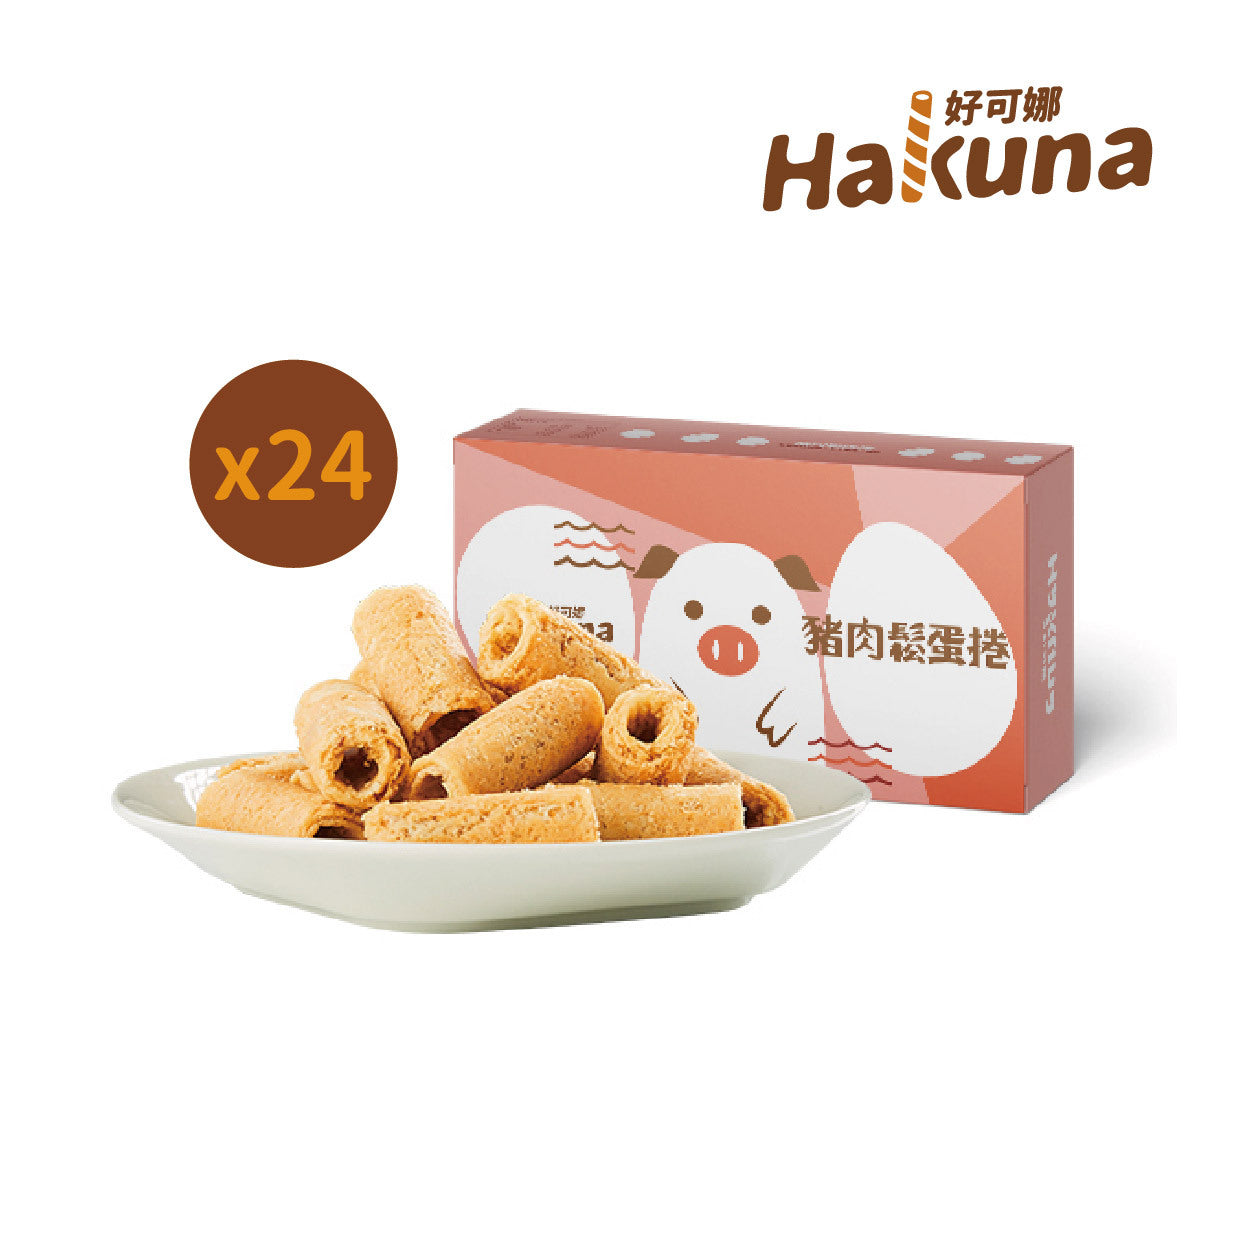 【Hakuna】pork floss egg rolls 24 boxes (9 small pieces/box)